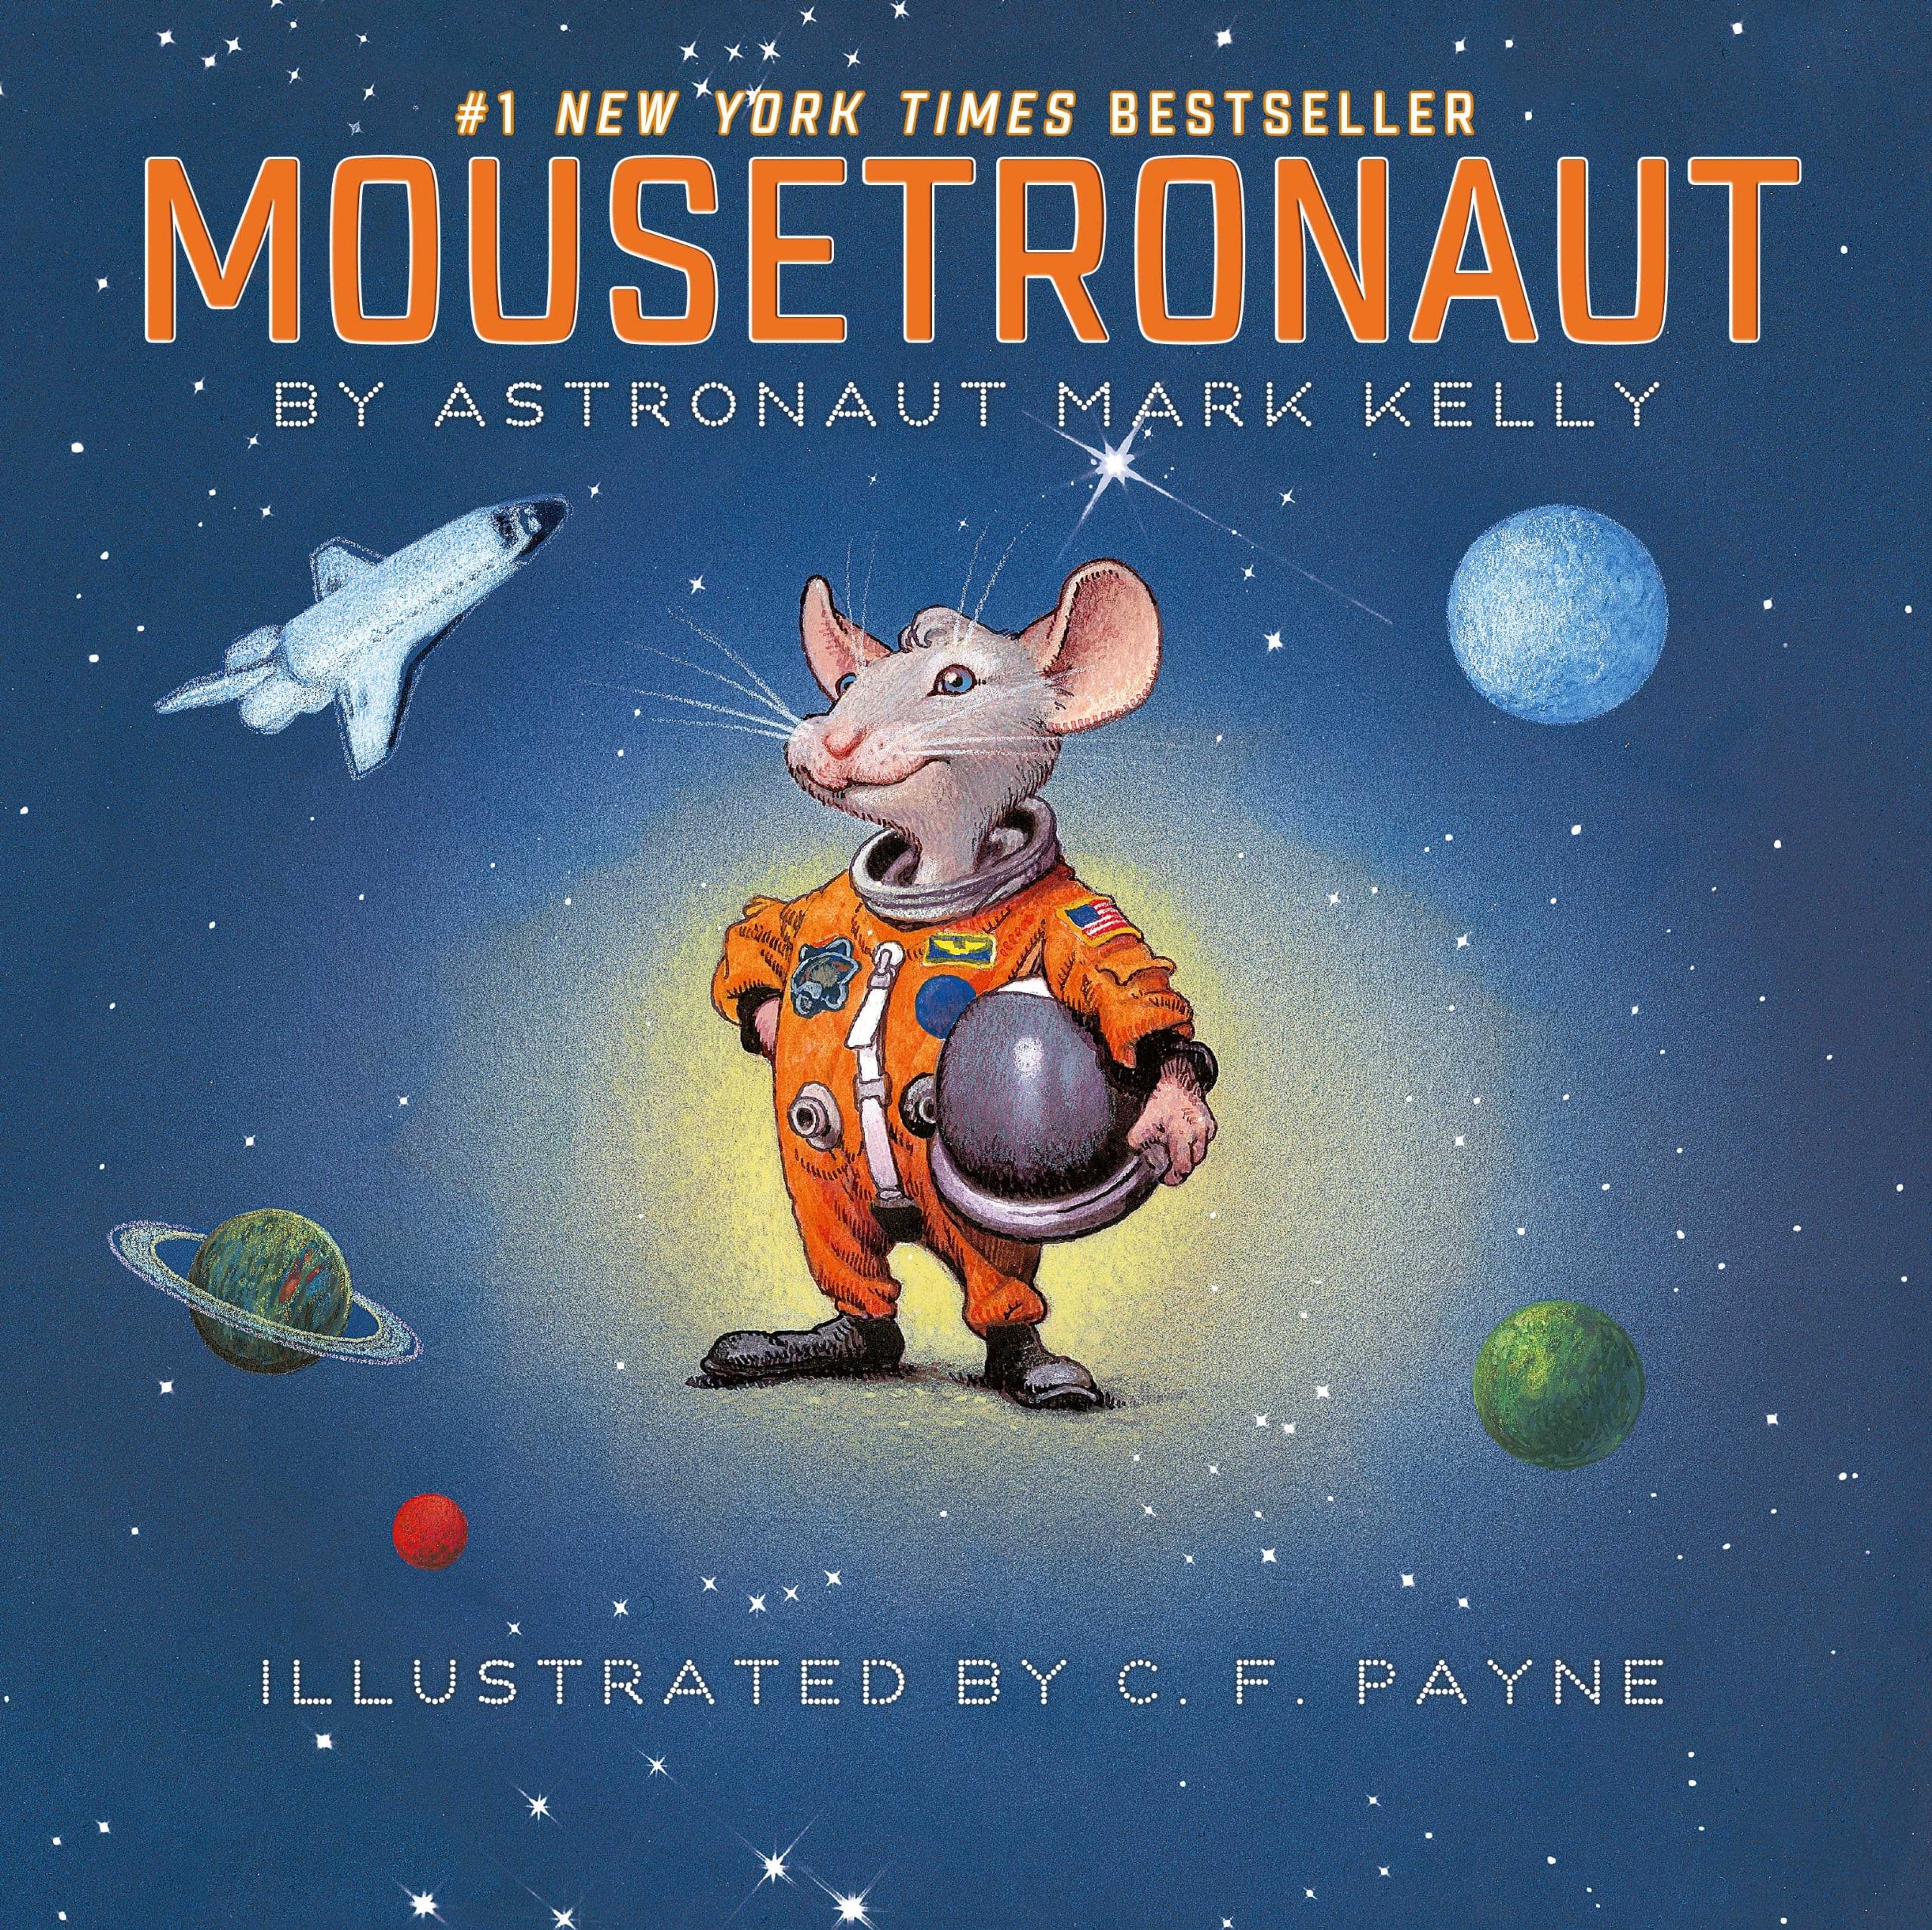 space mousetronaut